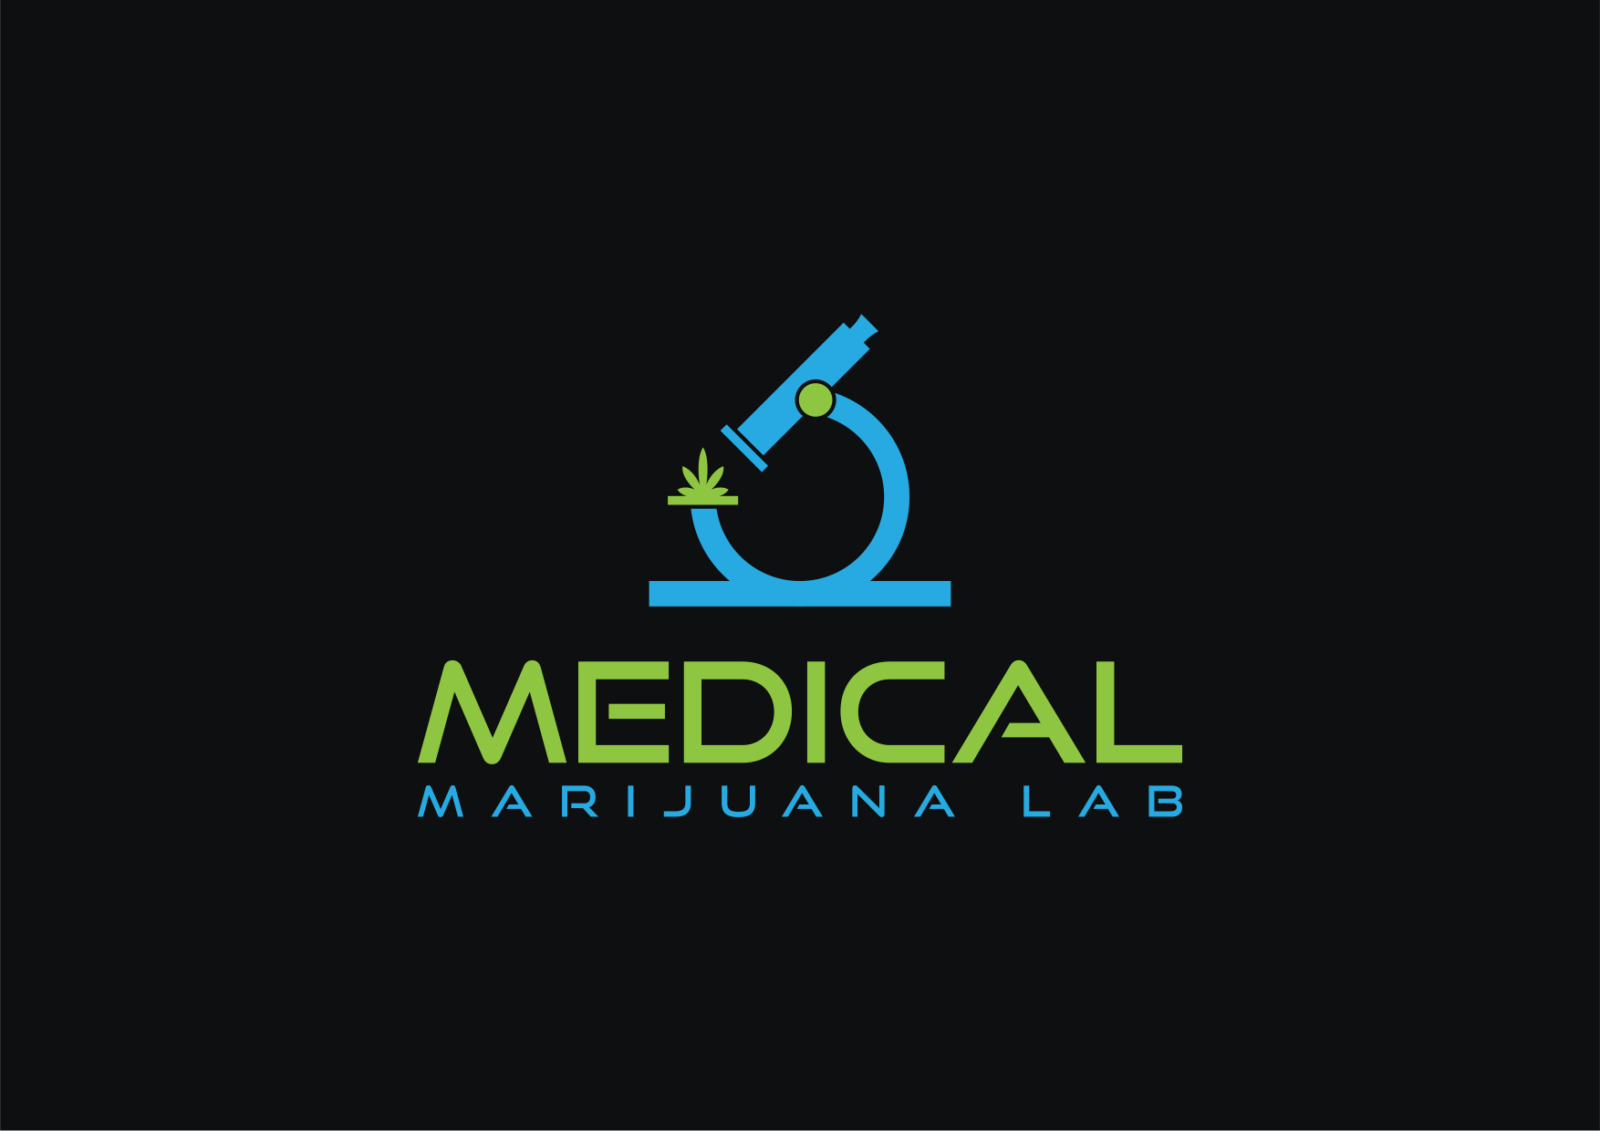 Medical Marijuana Lab domain name for sale